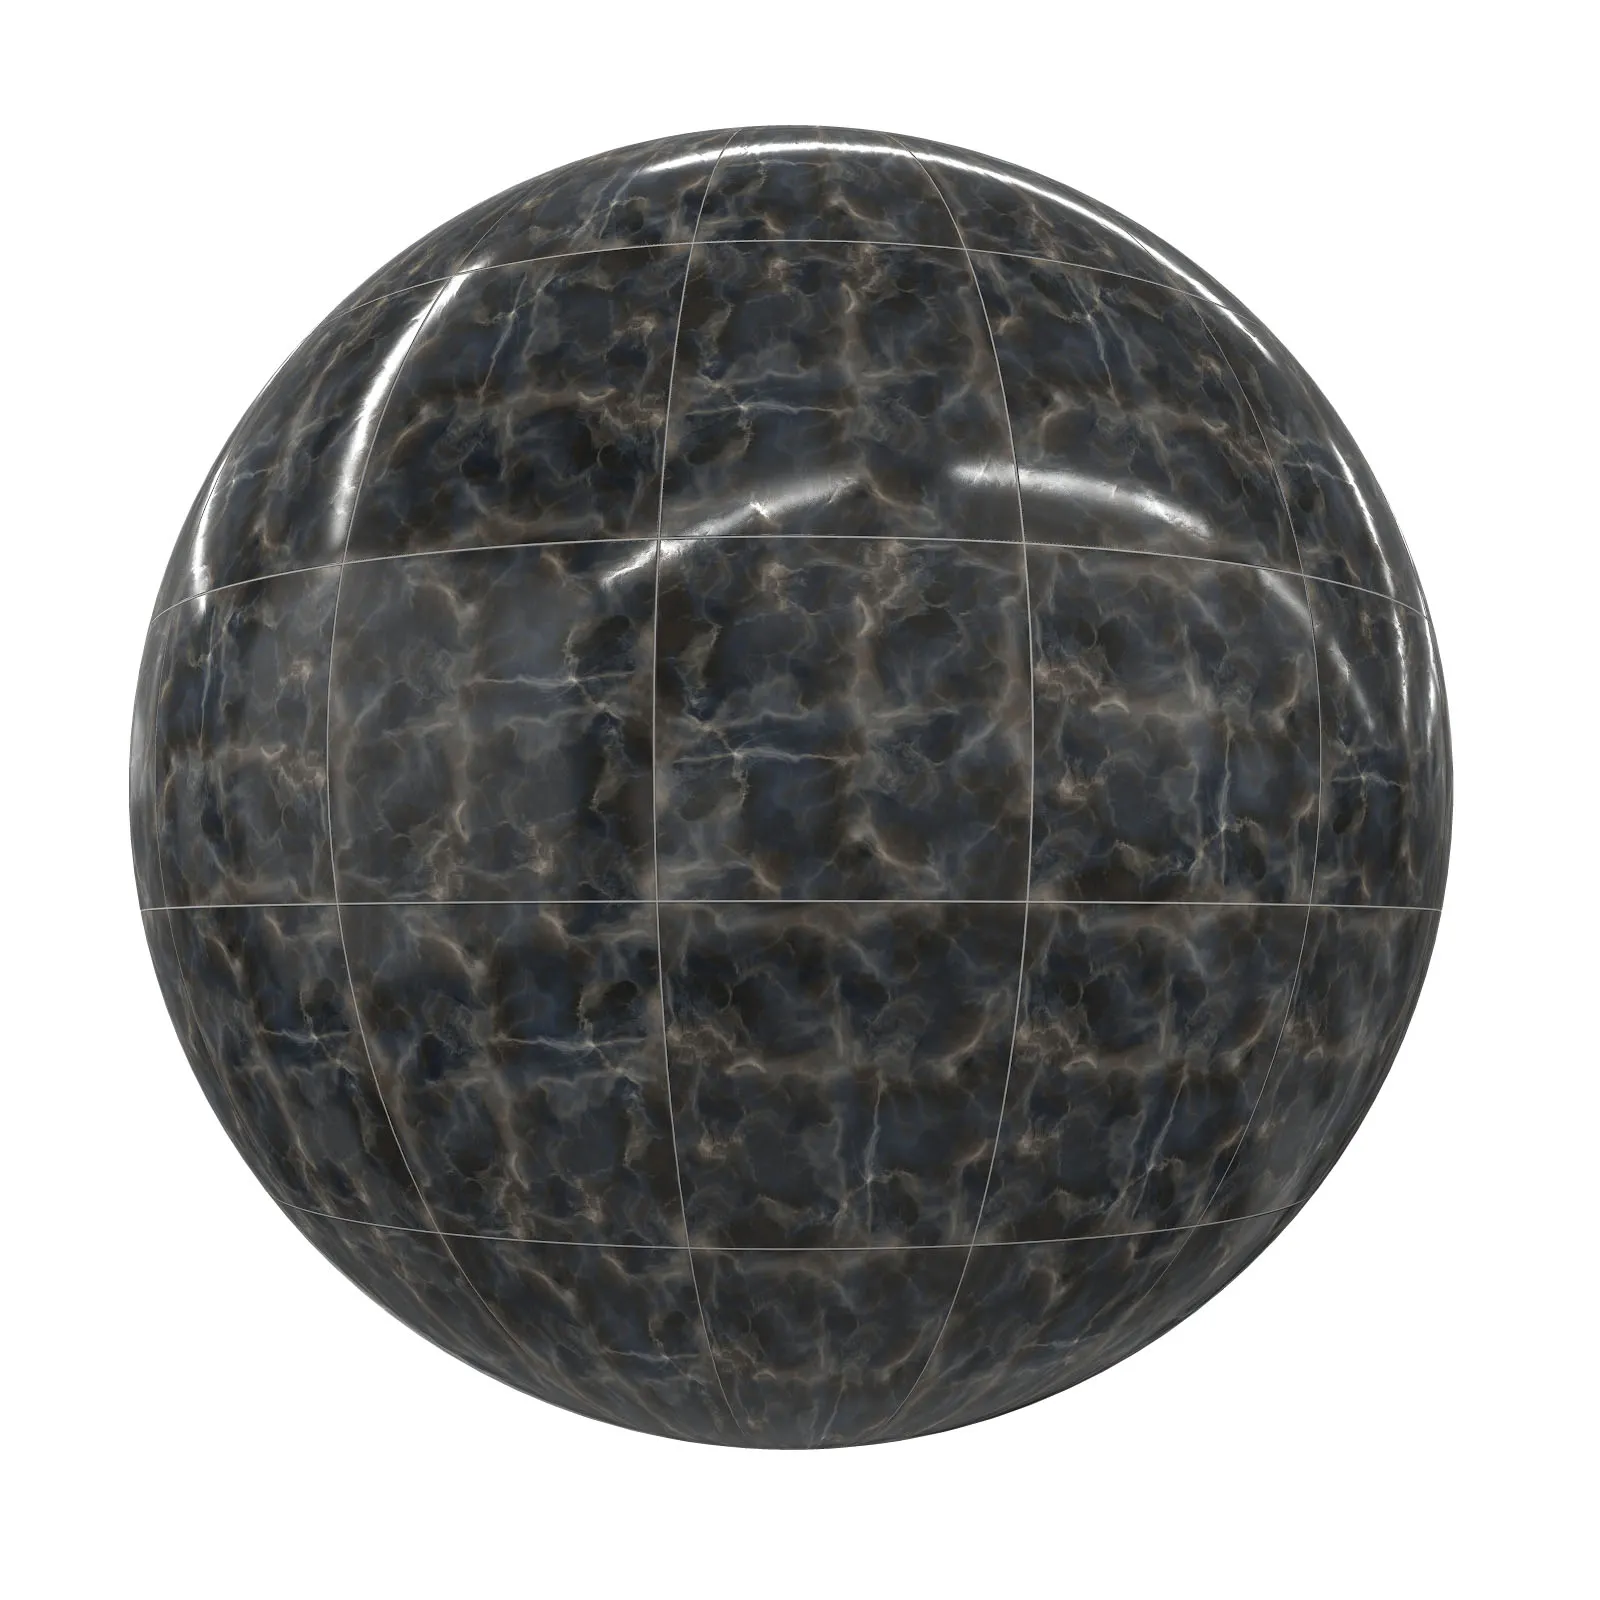 PBR CGAXIS TEXTURES – TILES – Black Marble Tiles 2